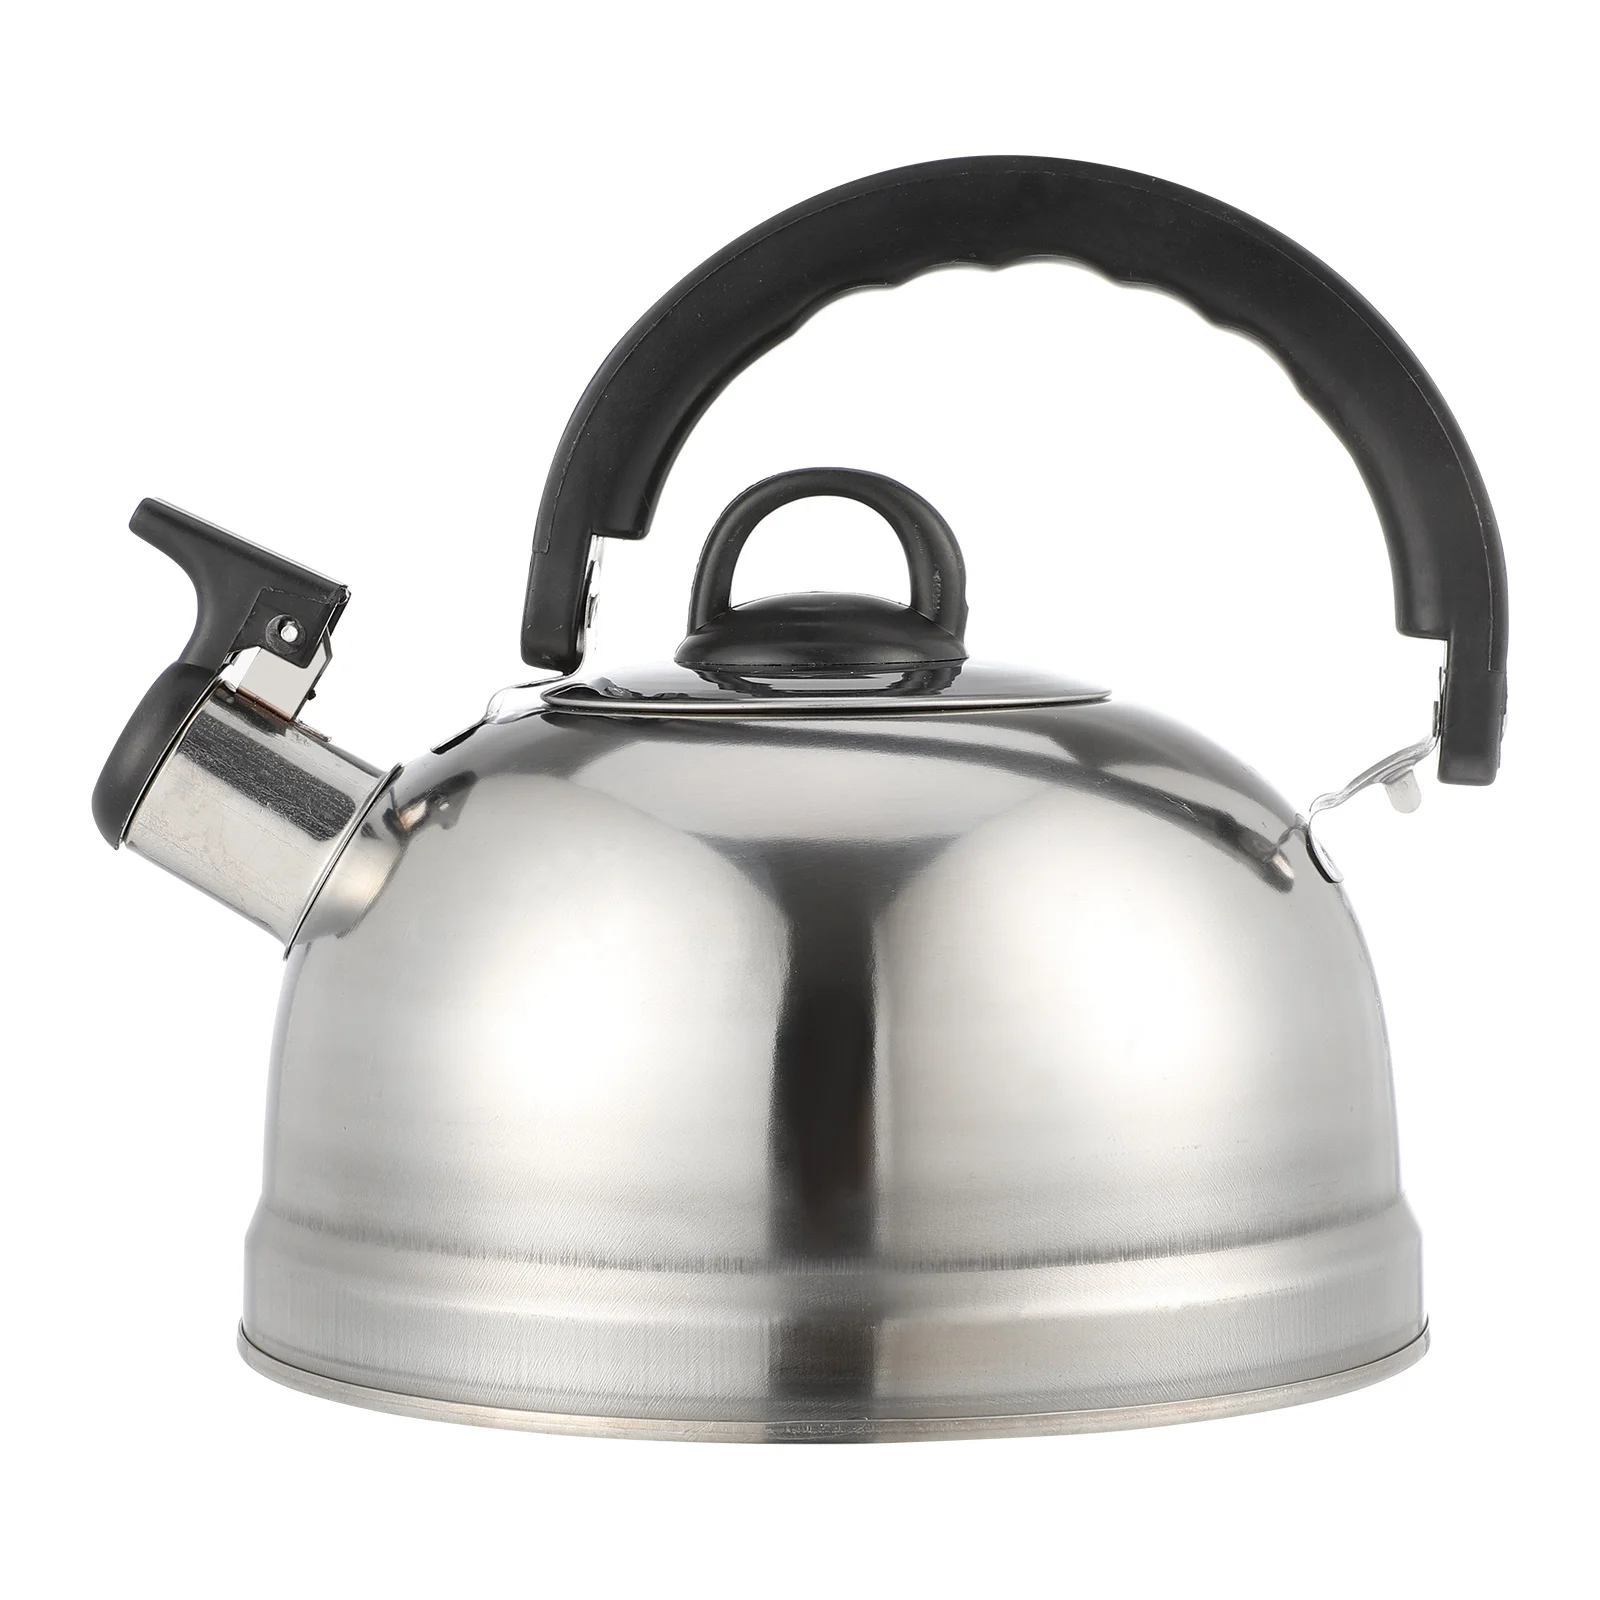 Купи Kettle Tea Whistling Water Teapot Stovetop Stove Steel Stainless Teakettle Pot Boiling Gas Hot Kettles Electric Home Coffee за 377 рублей в магазине AliExpress